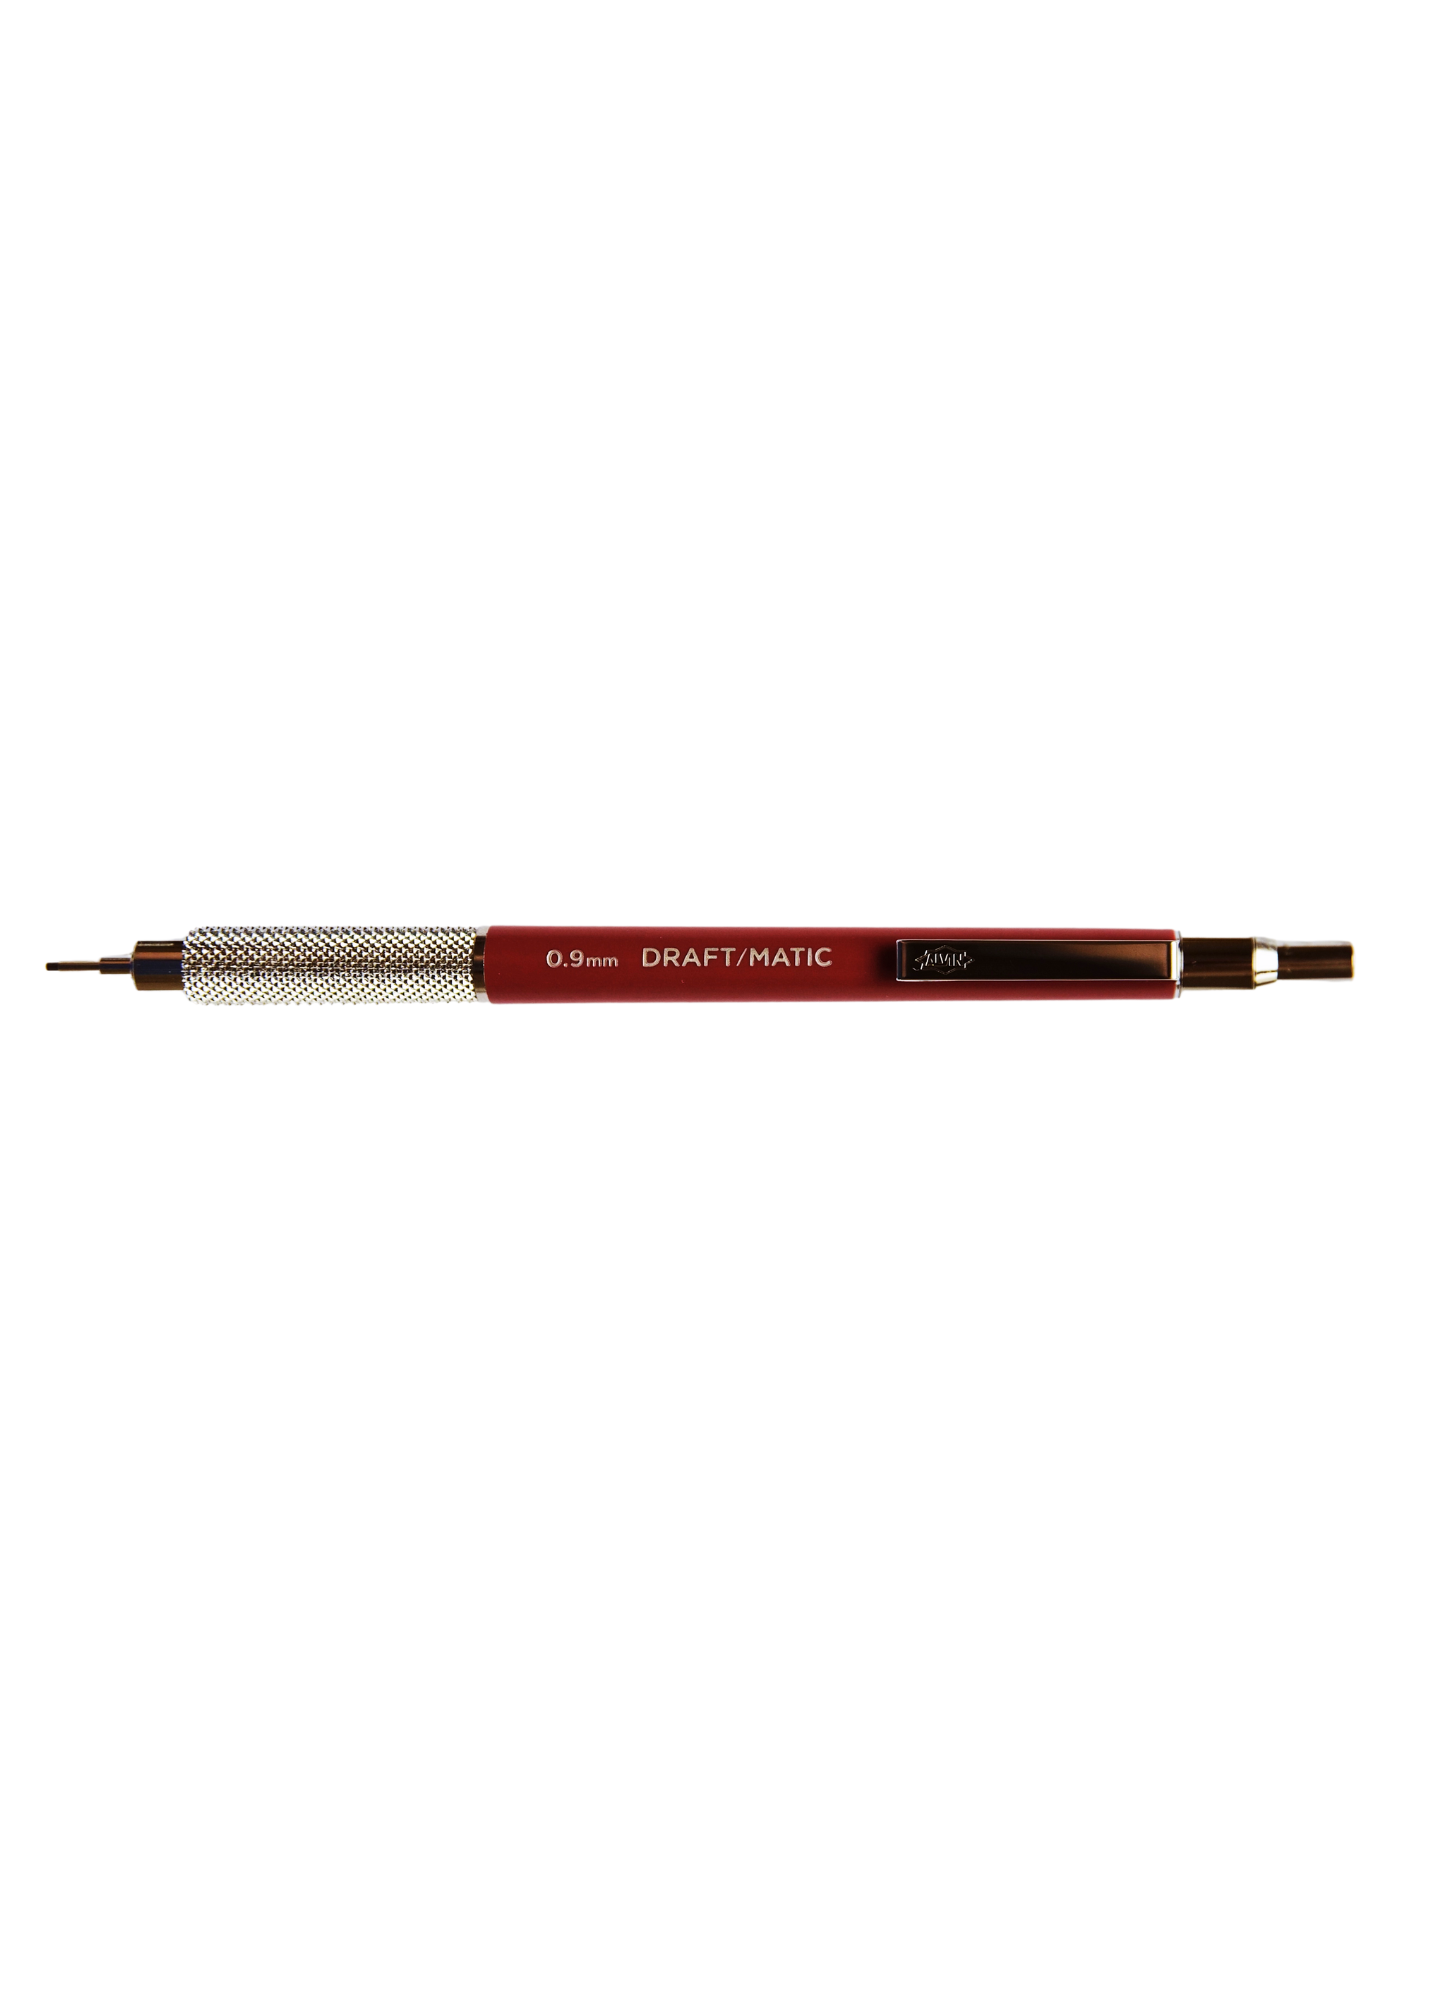 Draft/Matic Mechanical Pencil .9mm